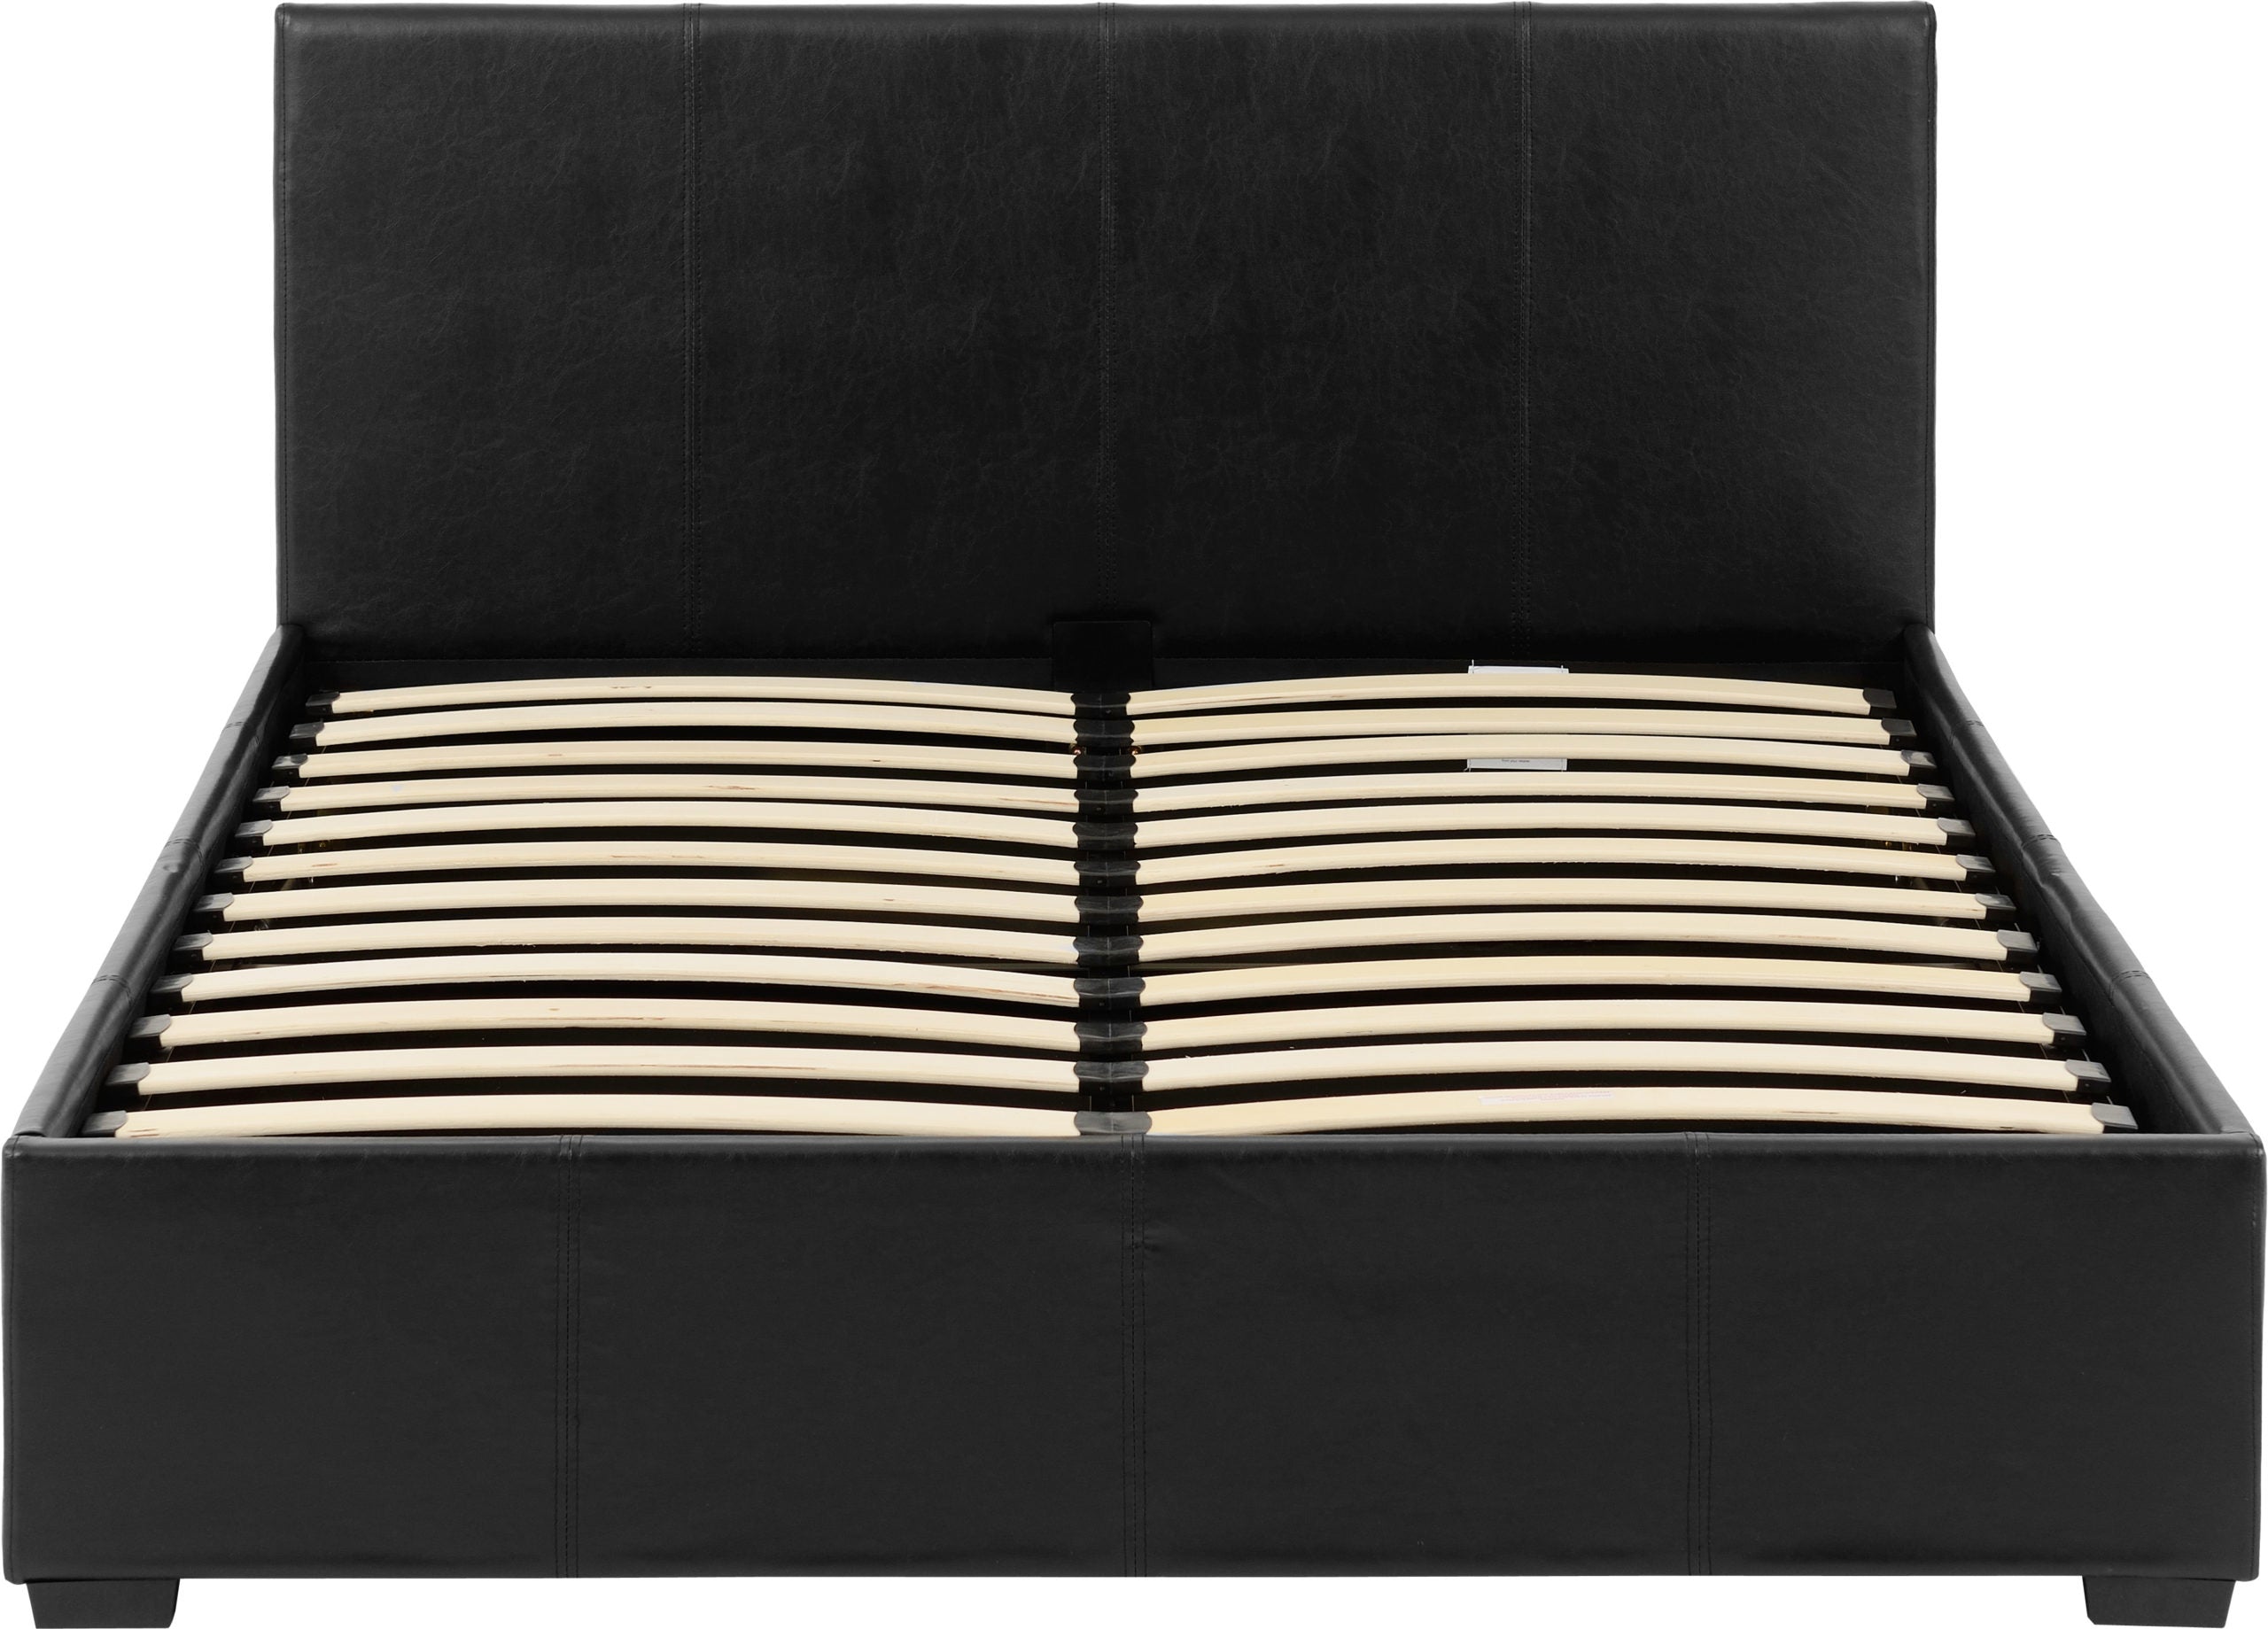 Waverley 5' Storage Bed Black Faux Leather